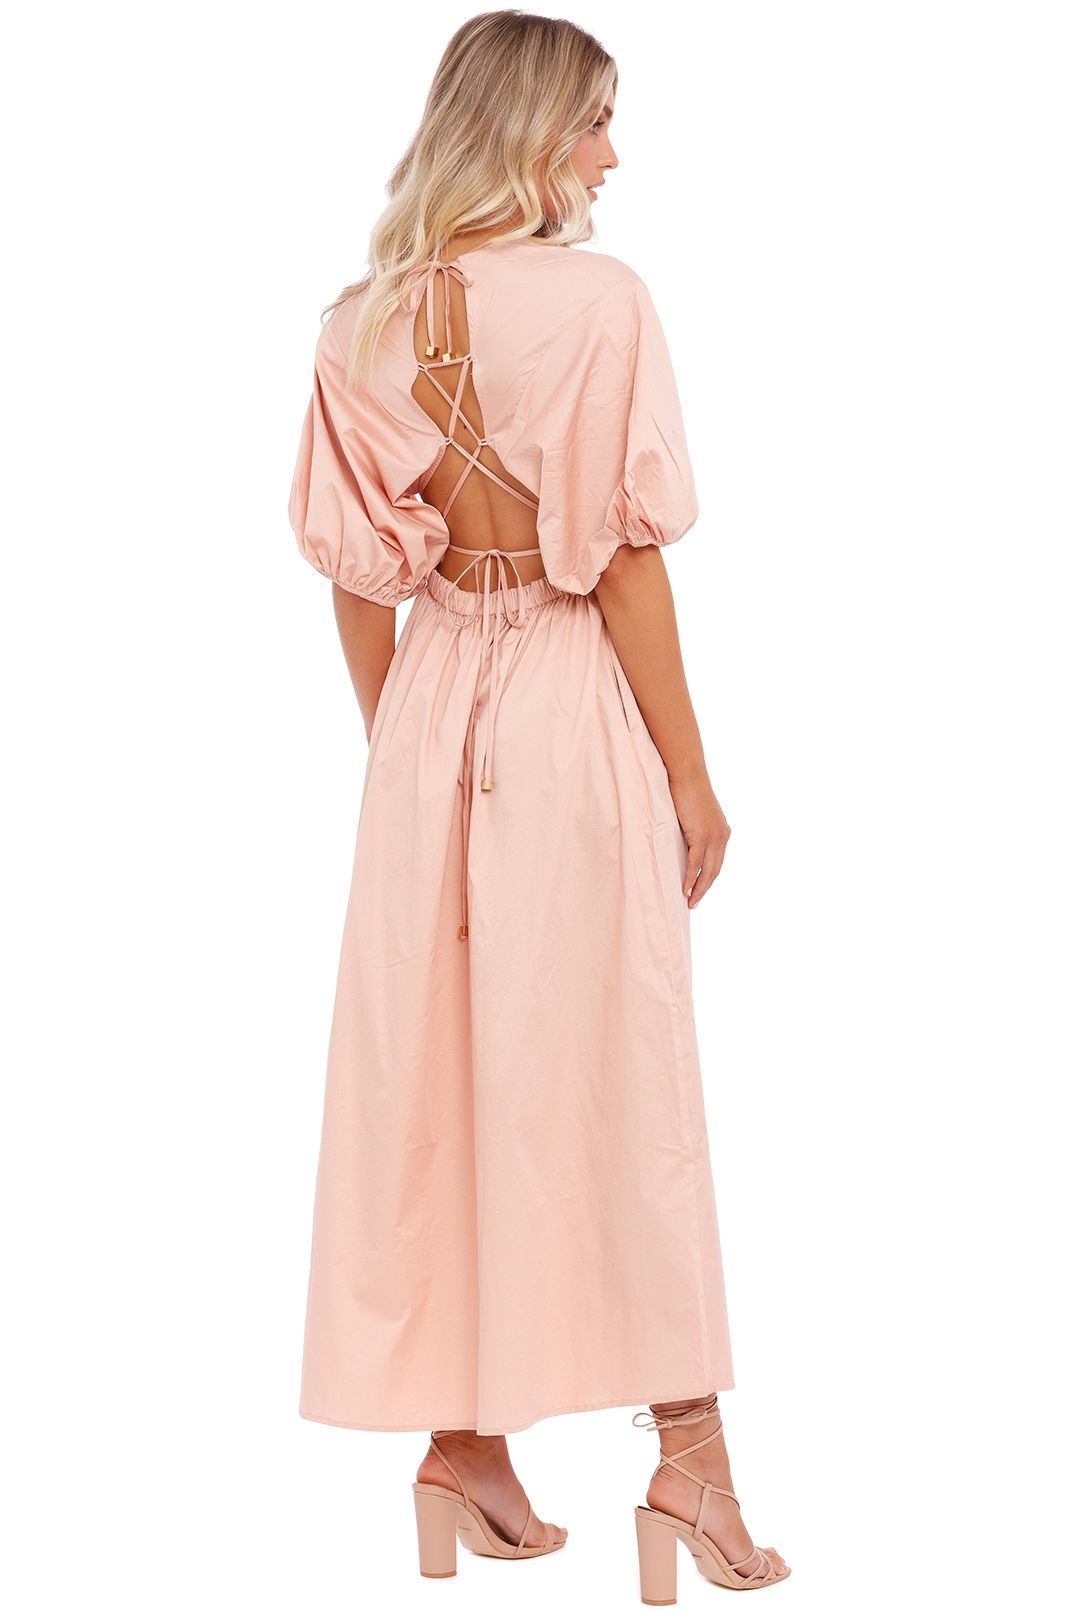 Suboo Rosanna Backless Dress Nude Pink Cutout